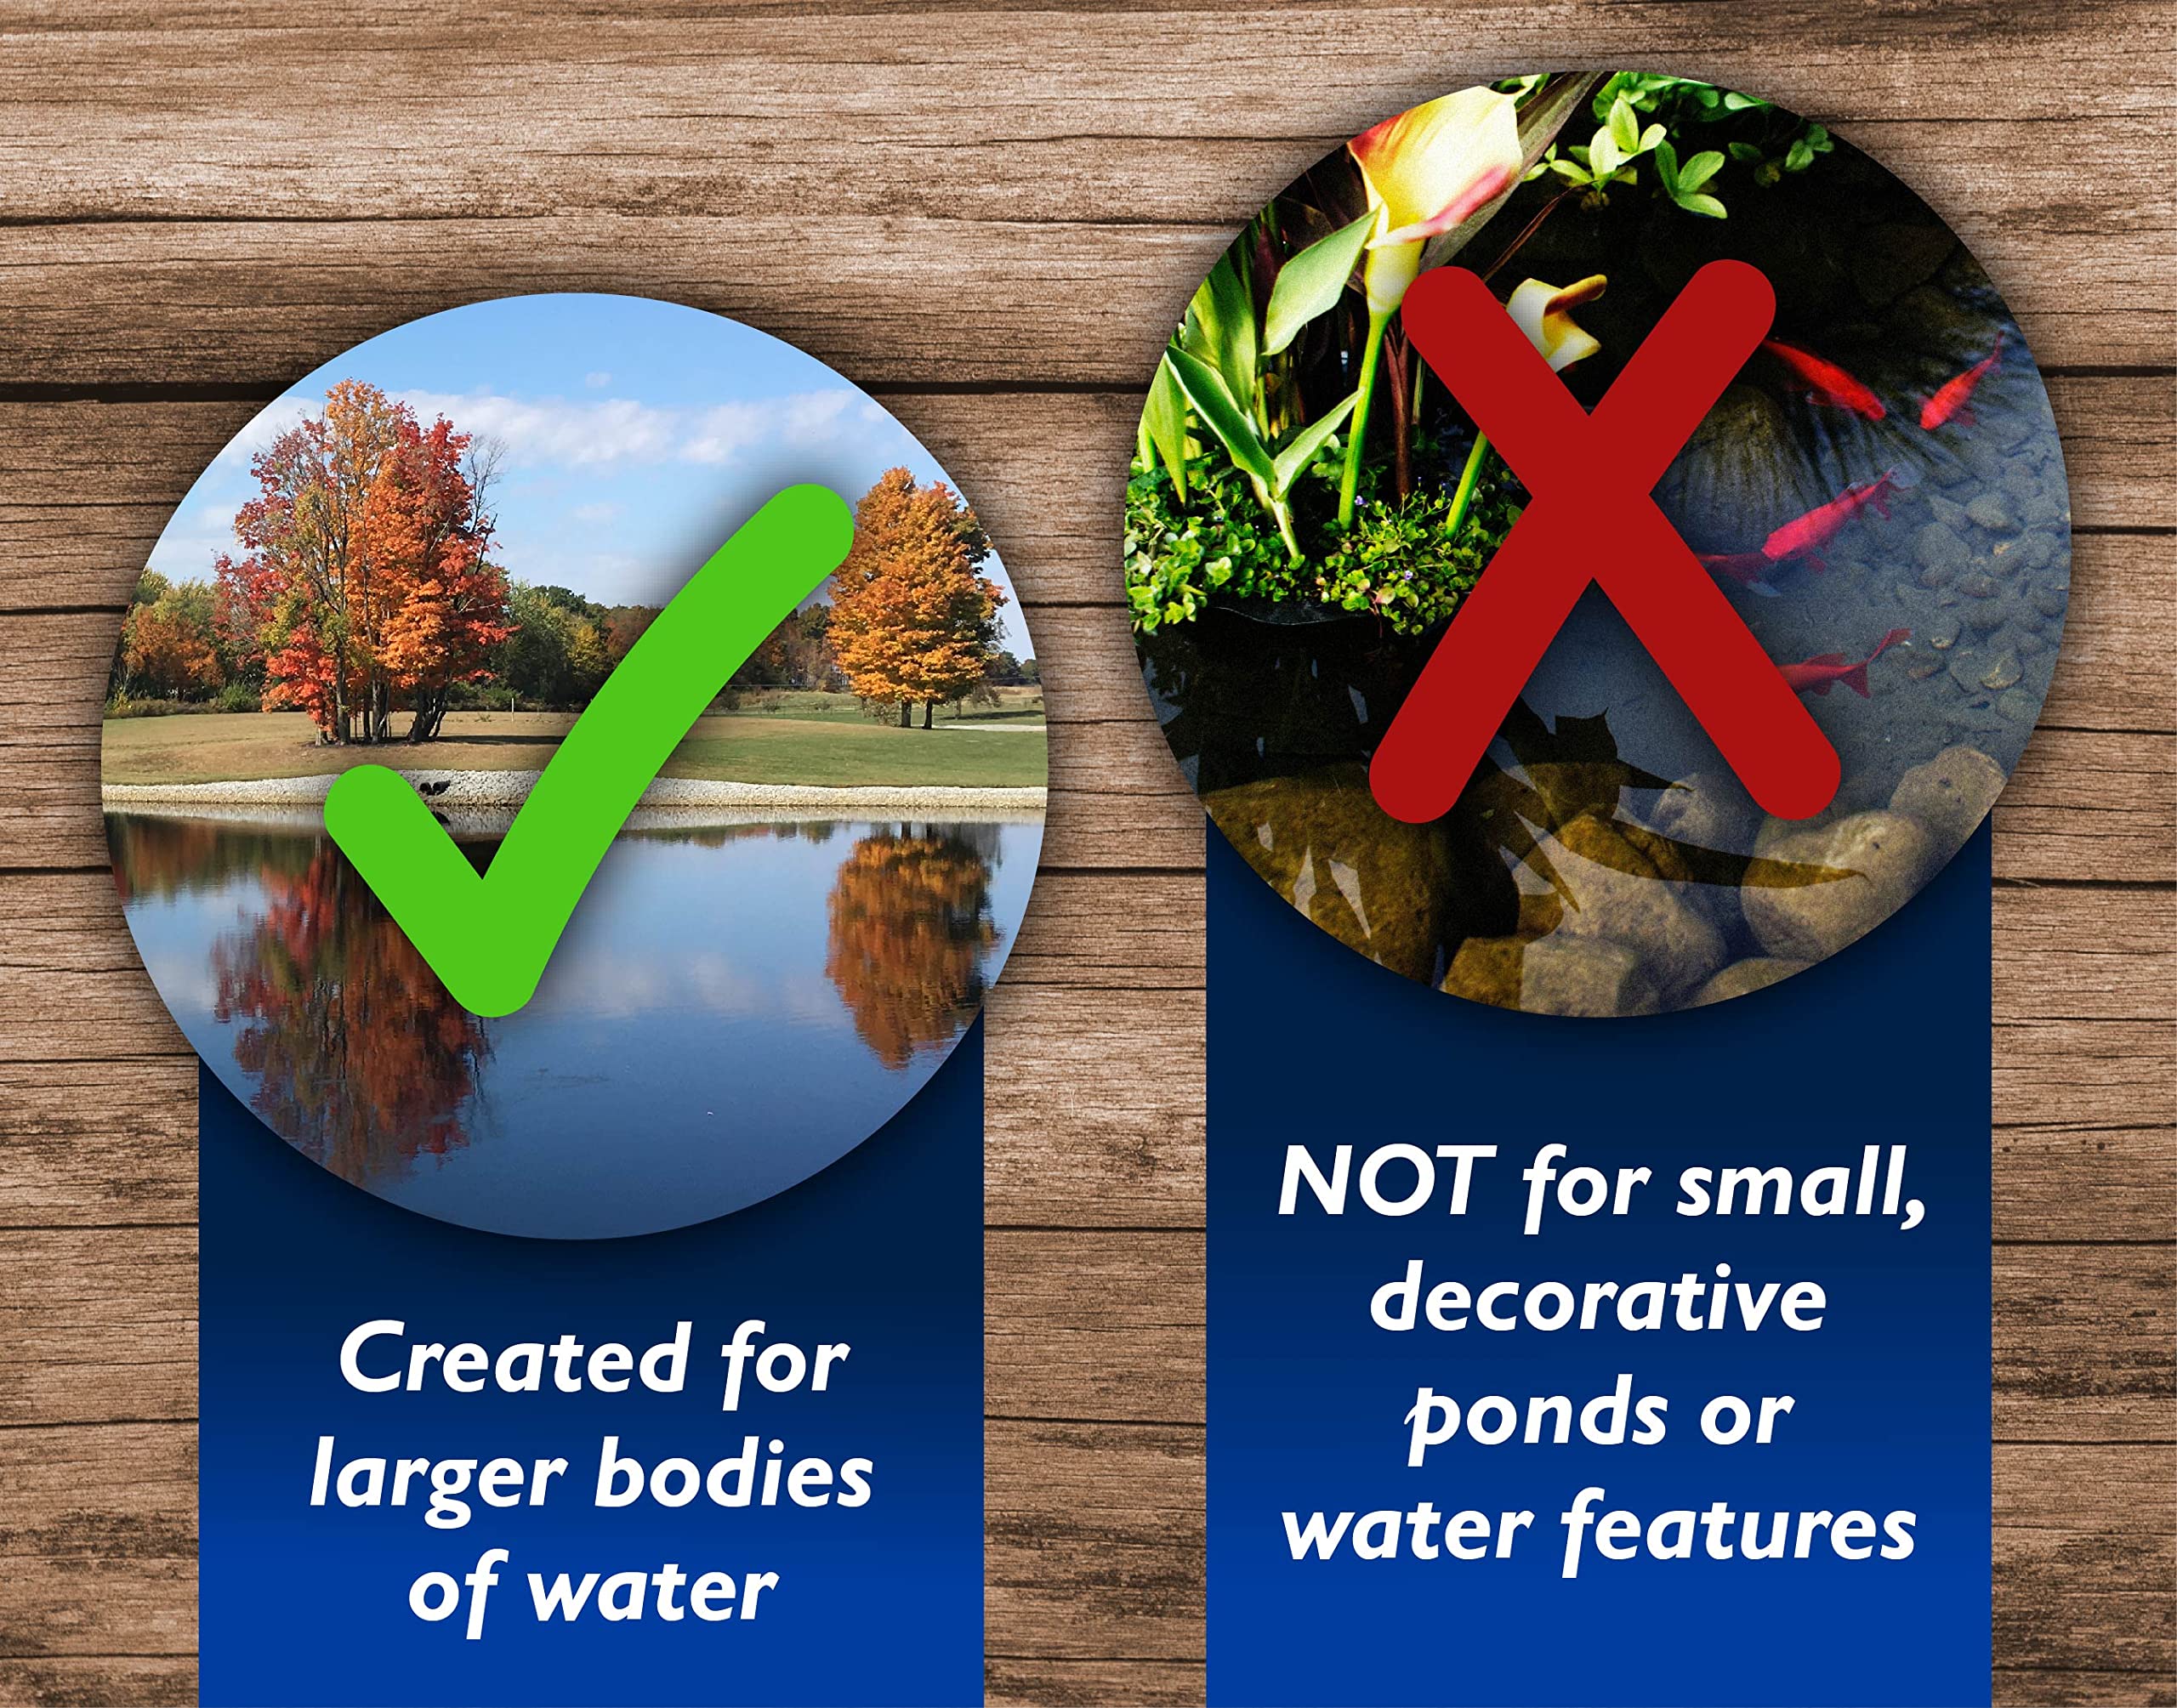 Crystal Blue Natural Pond Cleaner - Muck and Sludge Remover, Safe for Koi - 1 Gallon